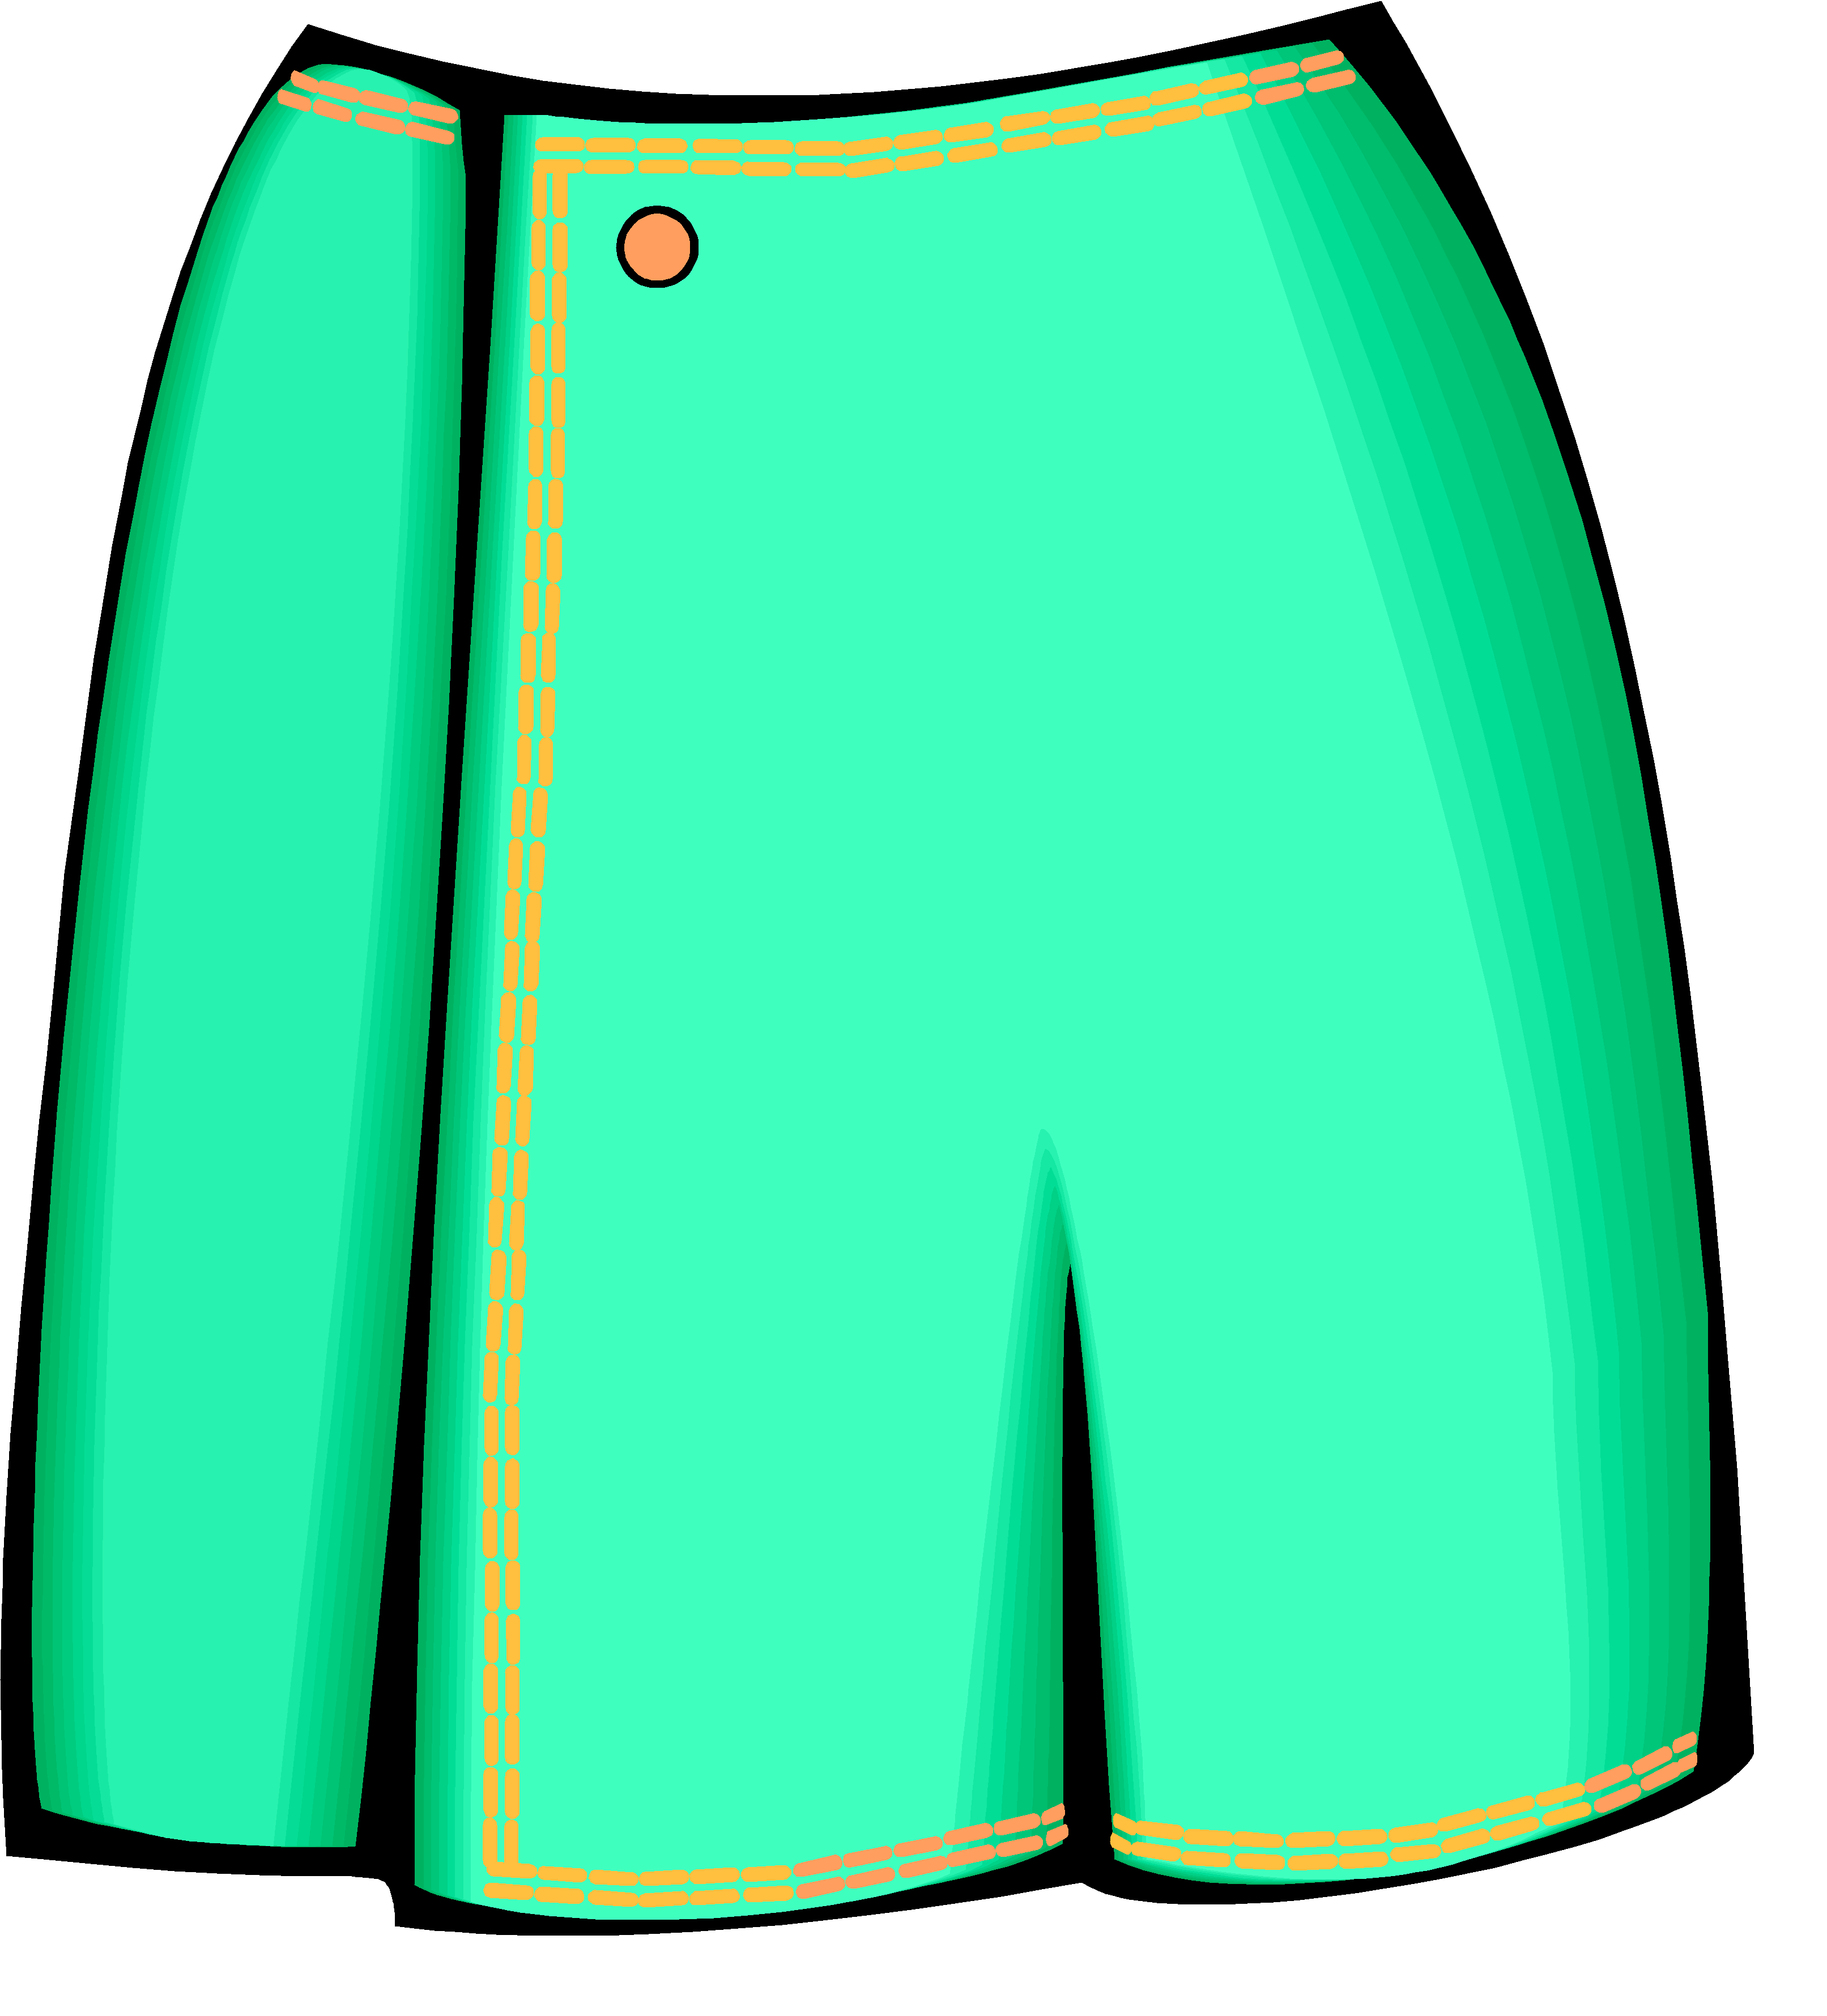 Short green shorts